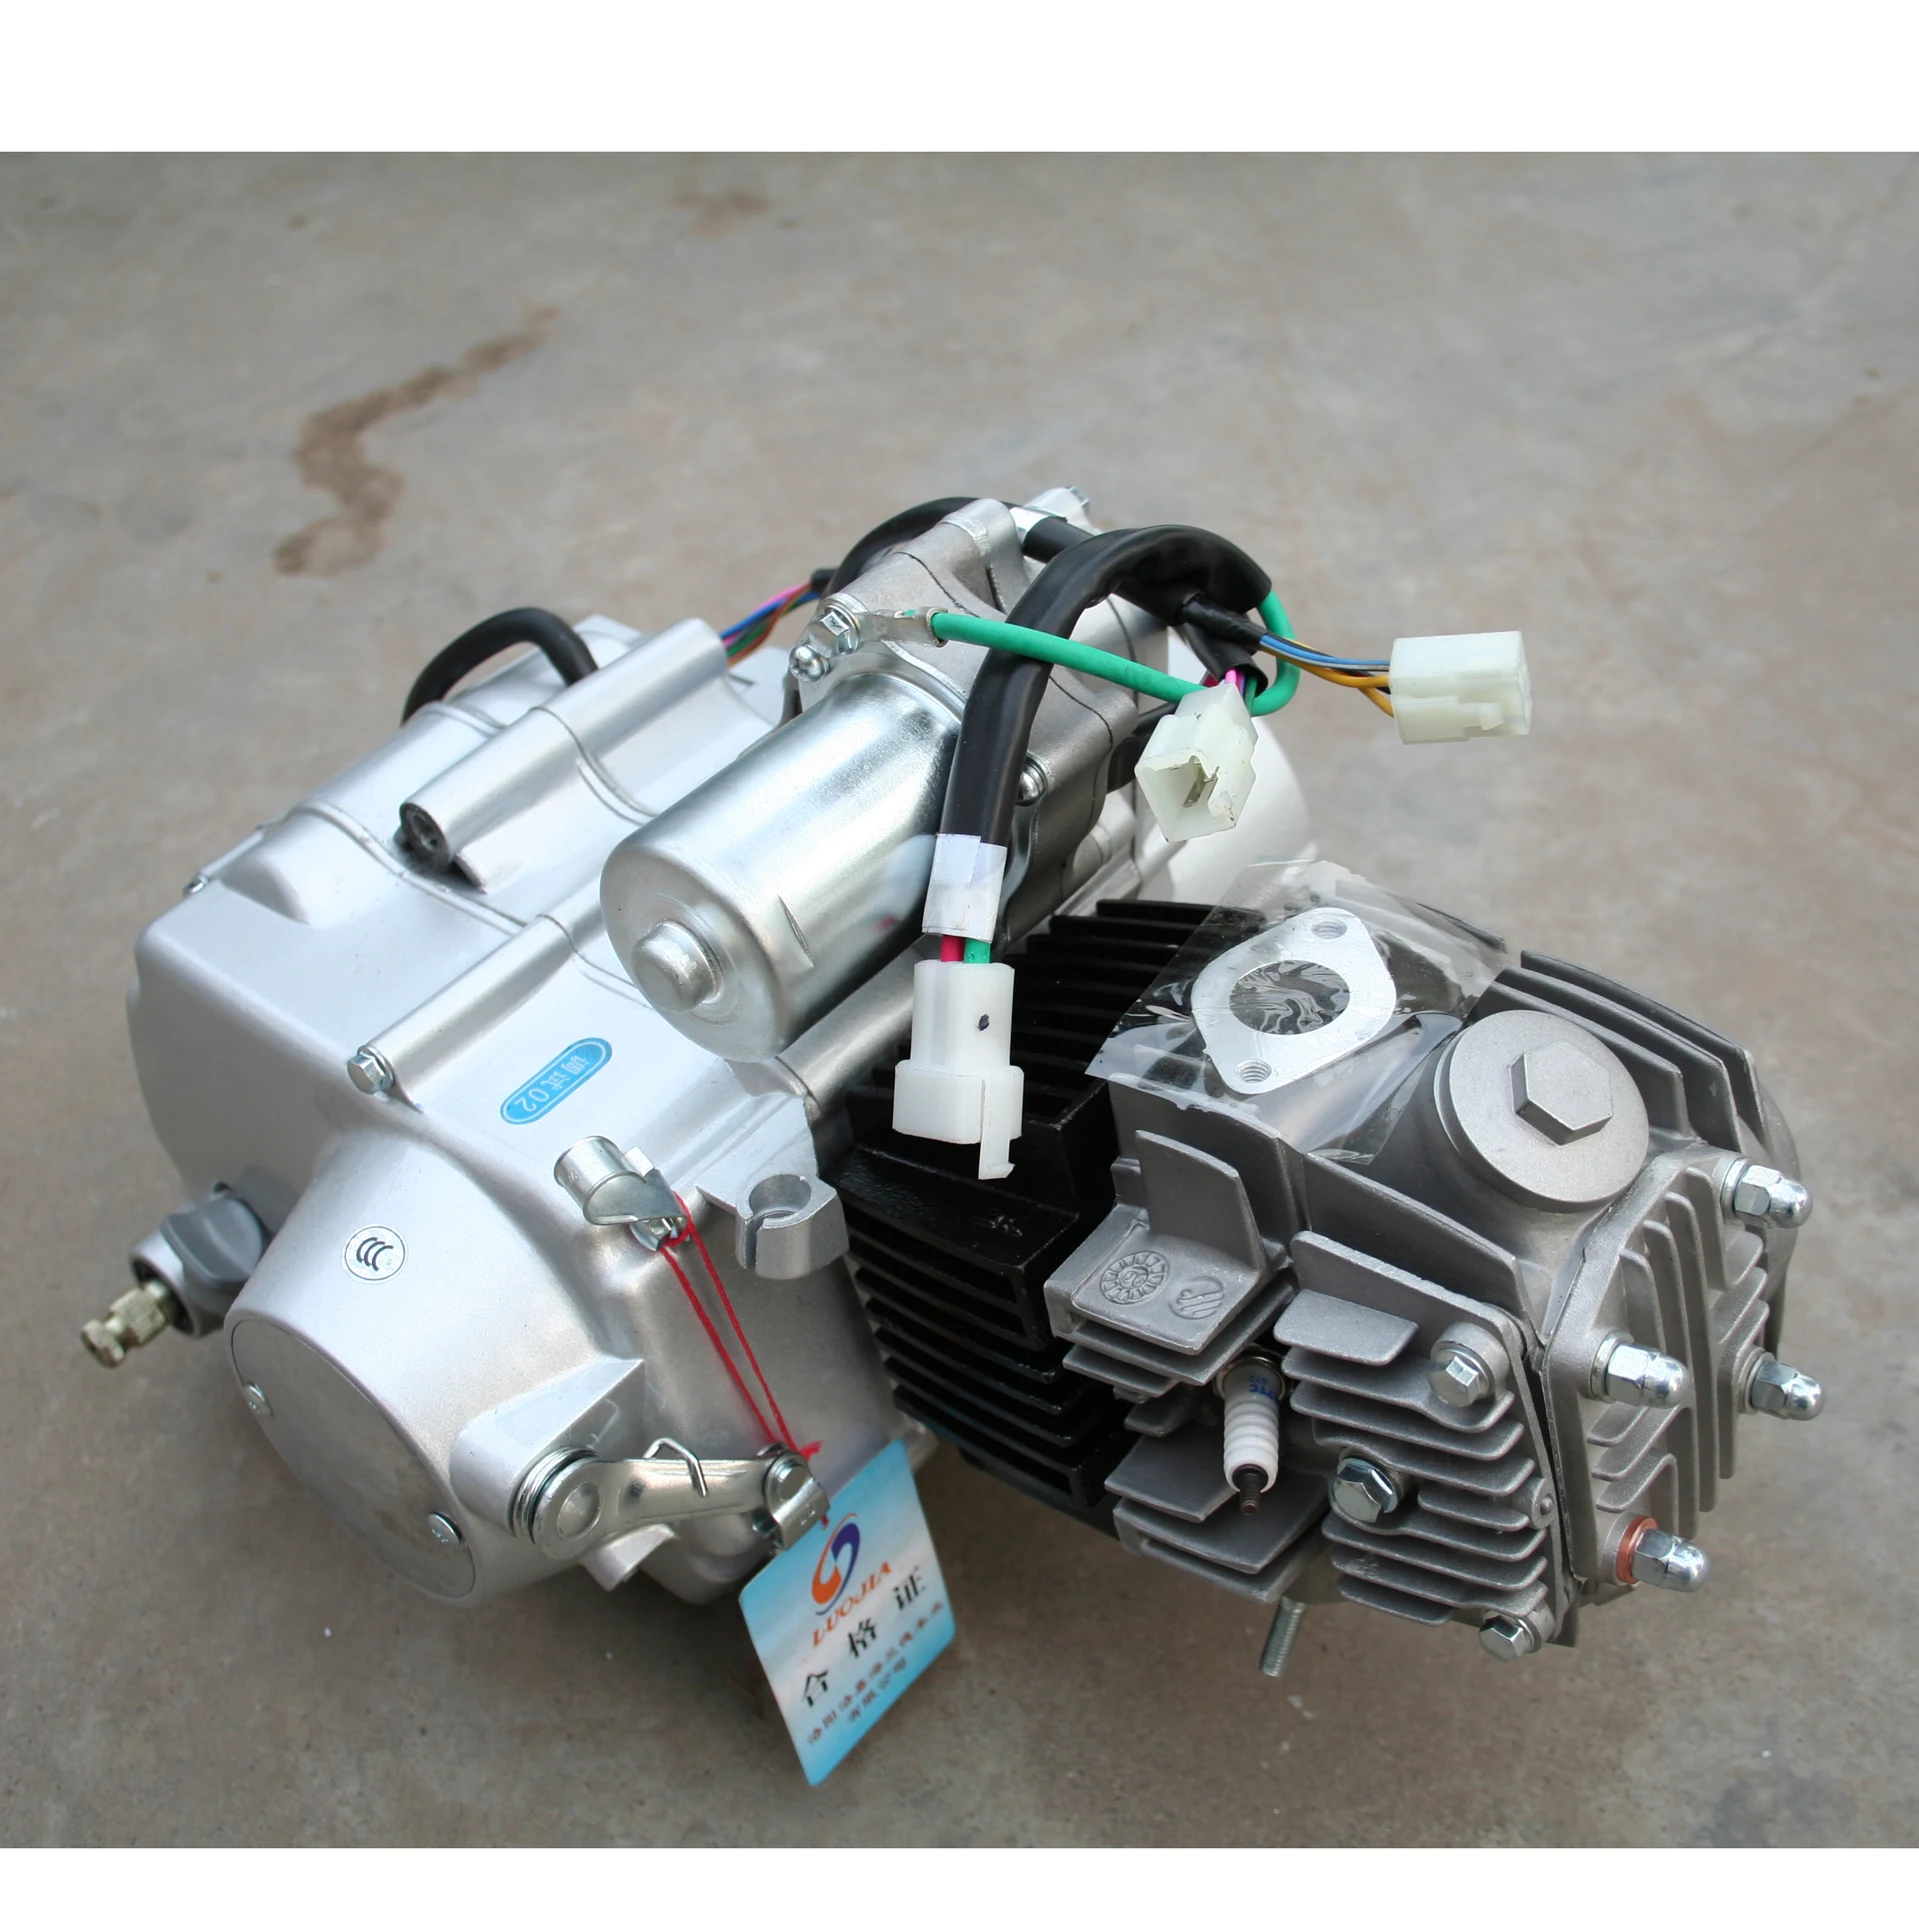 Cg 125cc Engine For Atv Triangle - Buy Cg 125cc Engine For Honda,125cc 4- Engine,125cc Engine on Alibaba.com